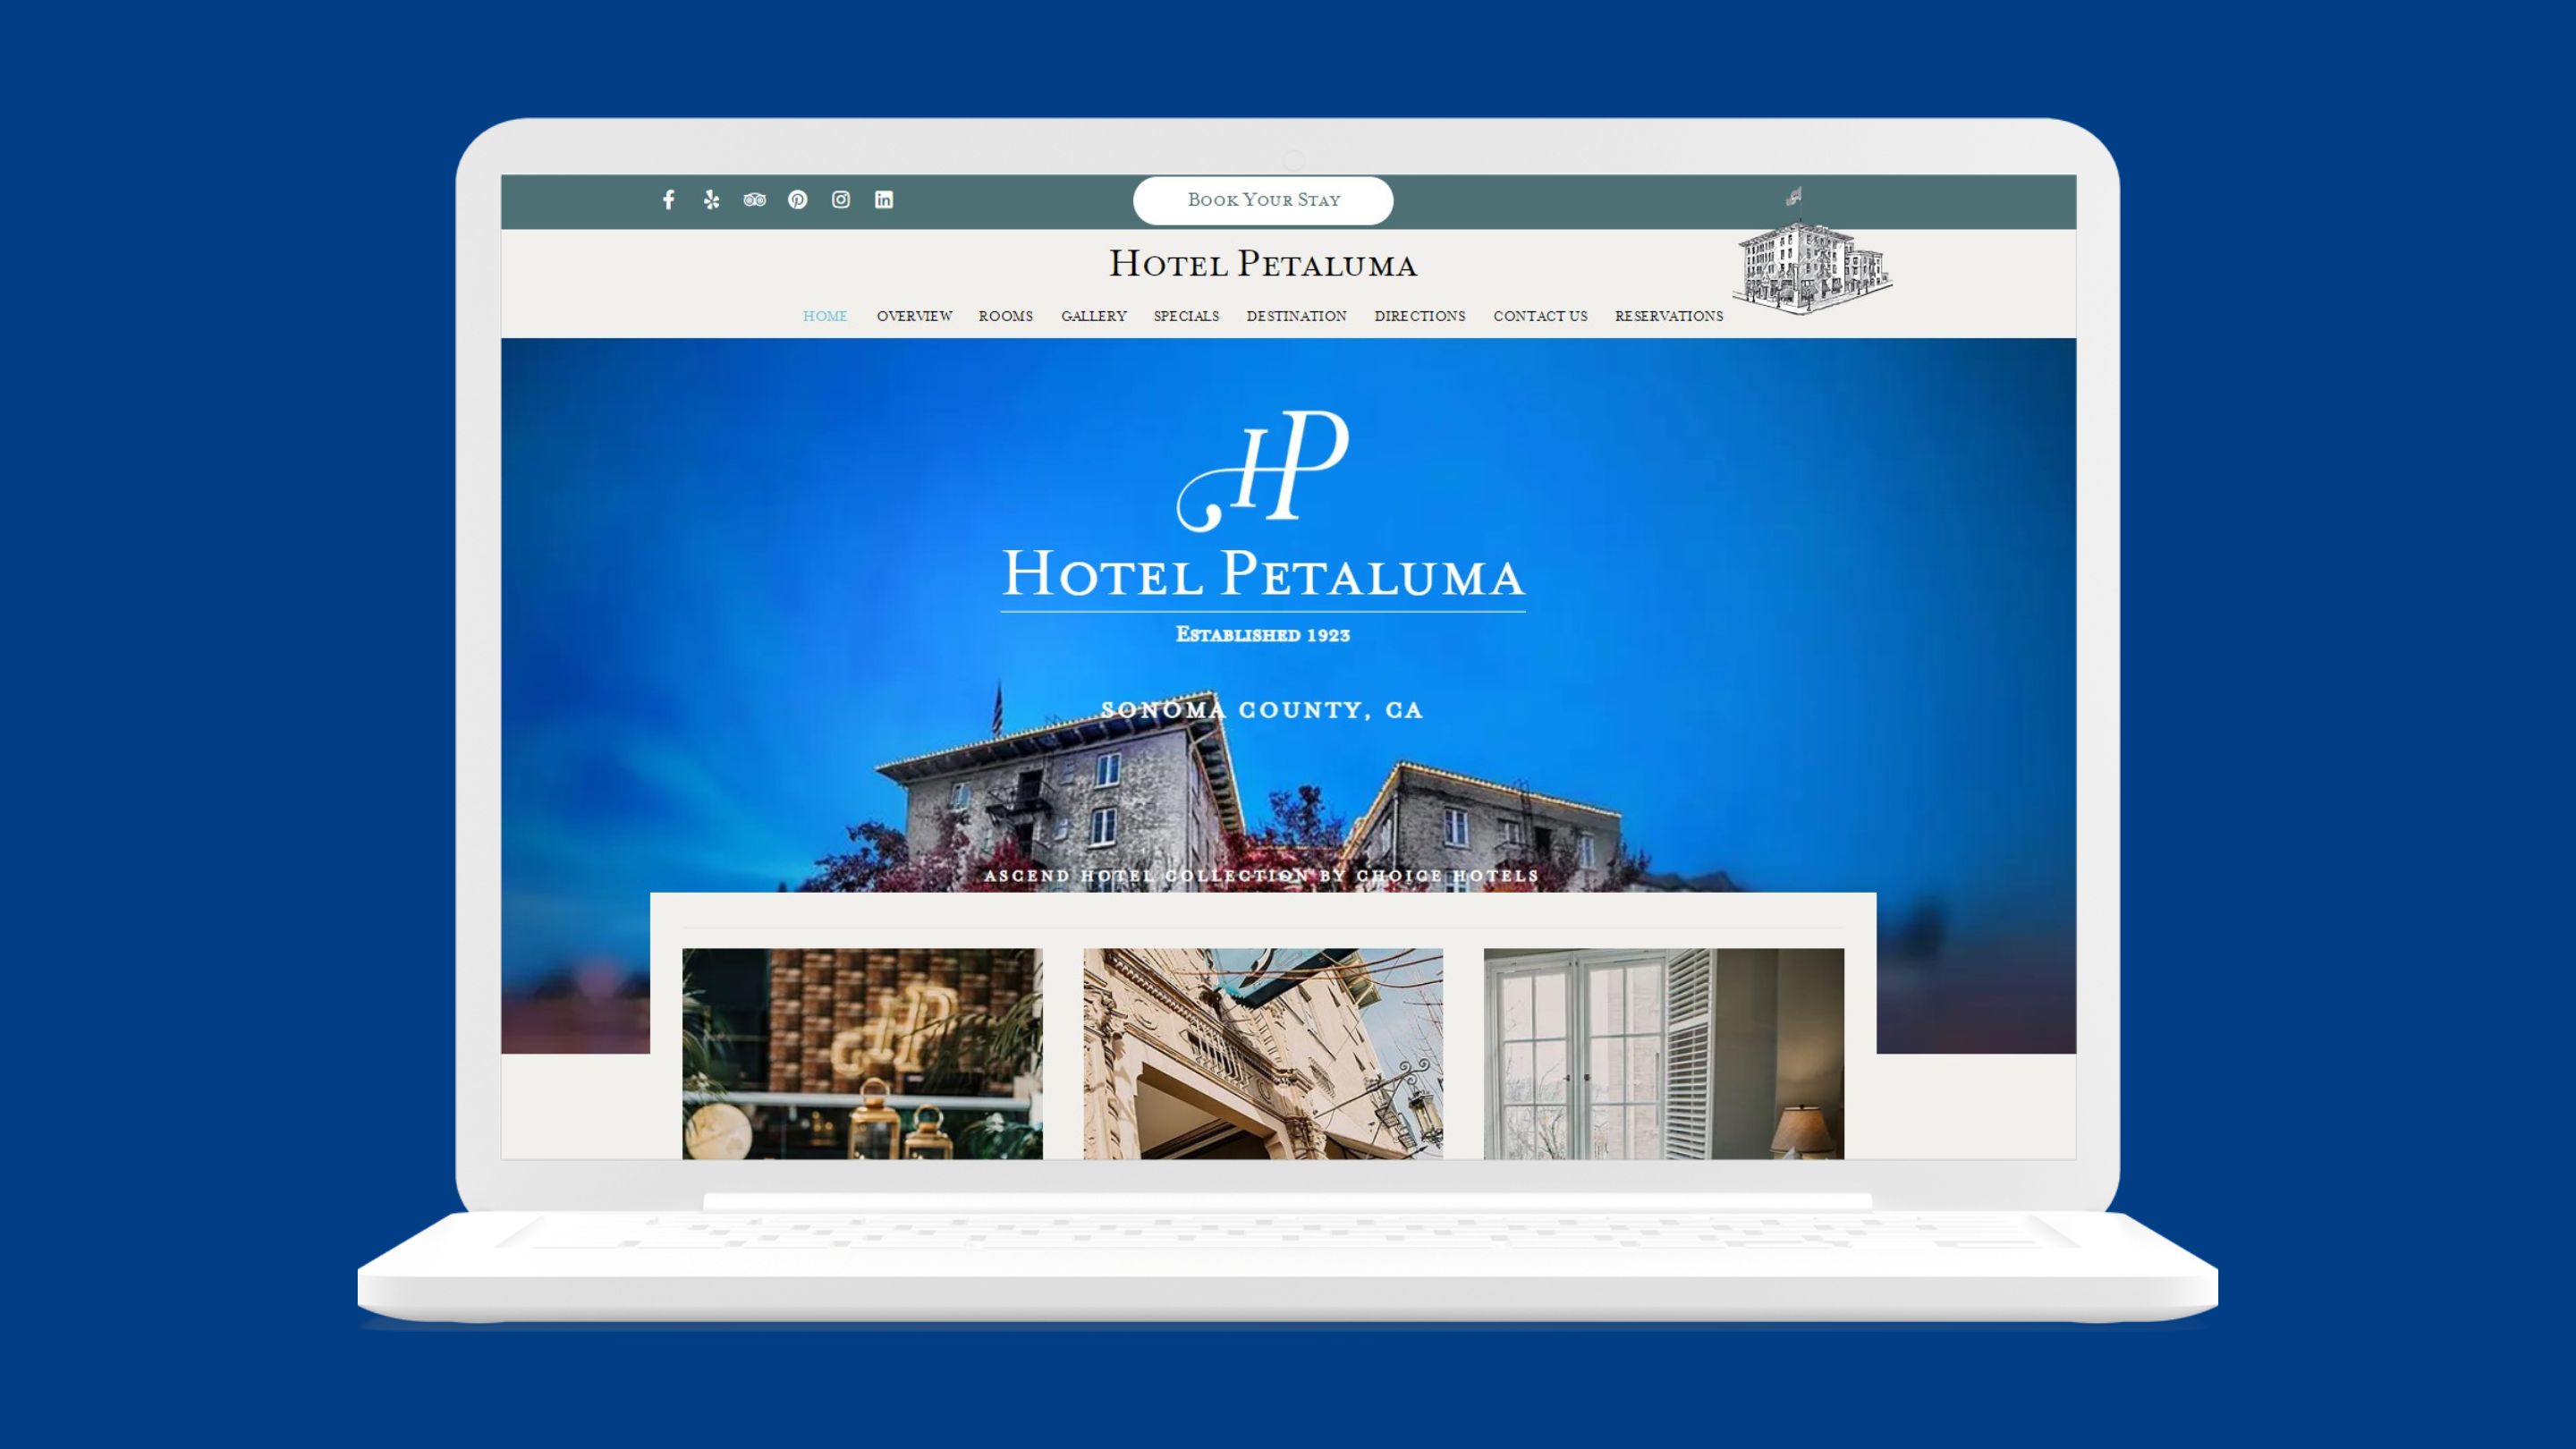 Hotel Petaluma homepage content